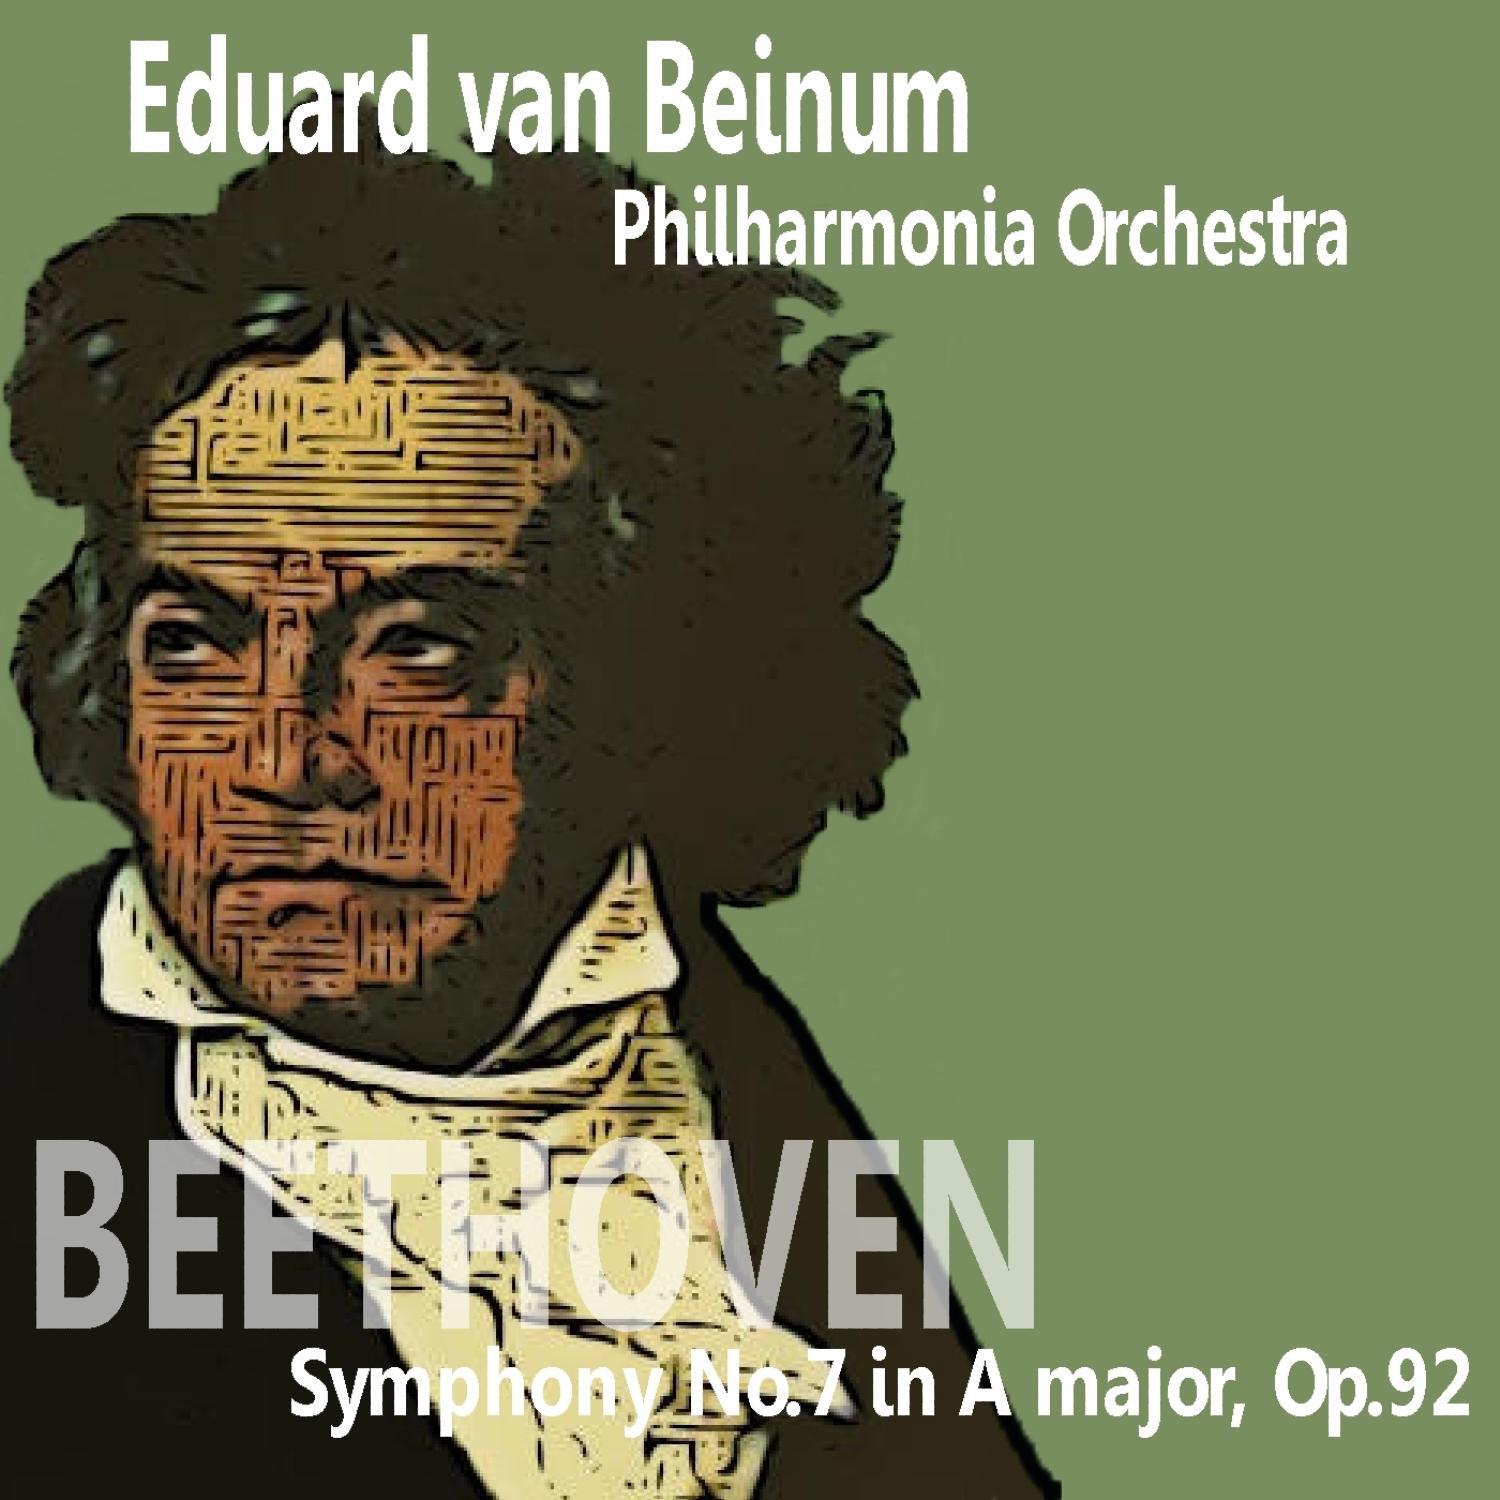 Beethoven: Symphony No. 7 in A Major